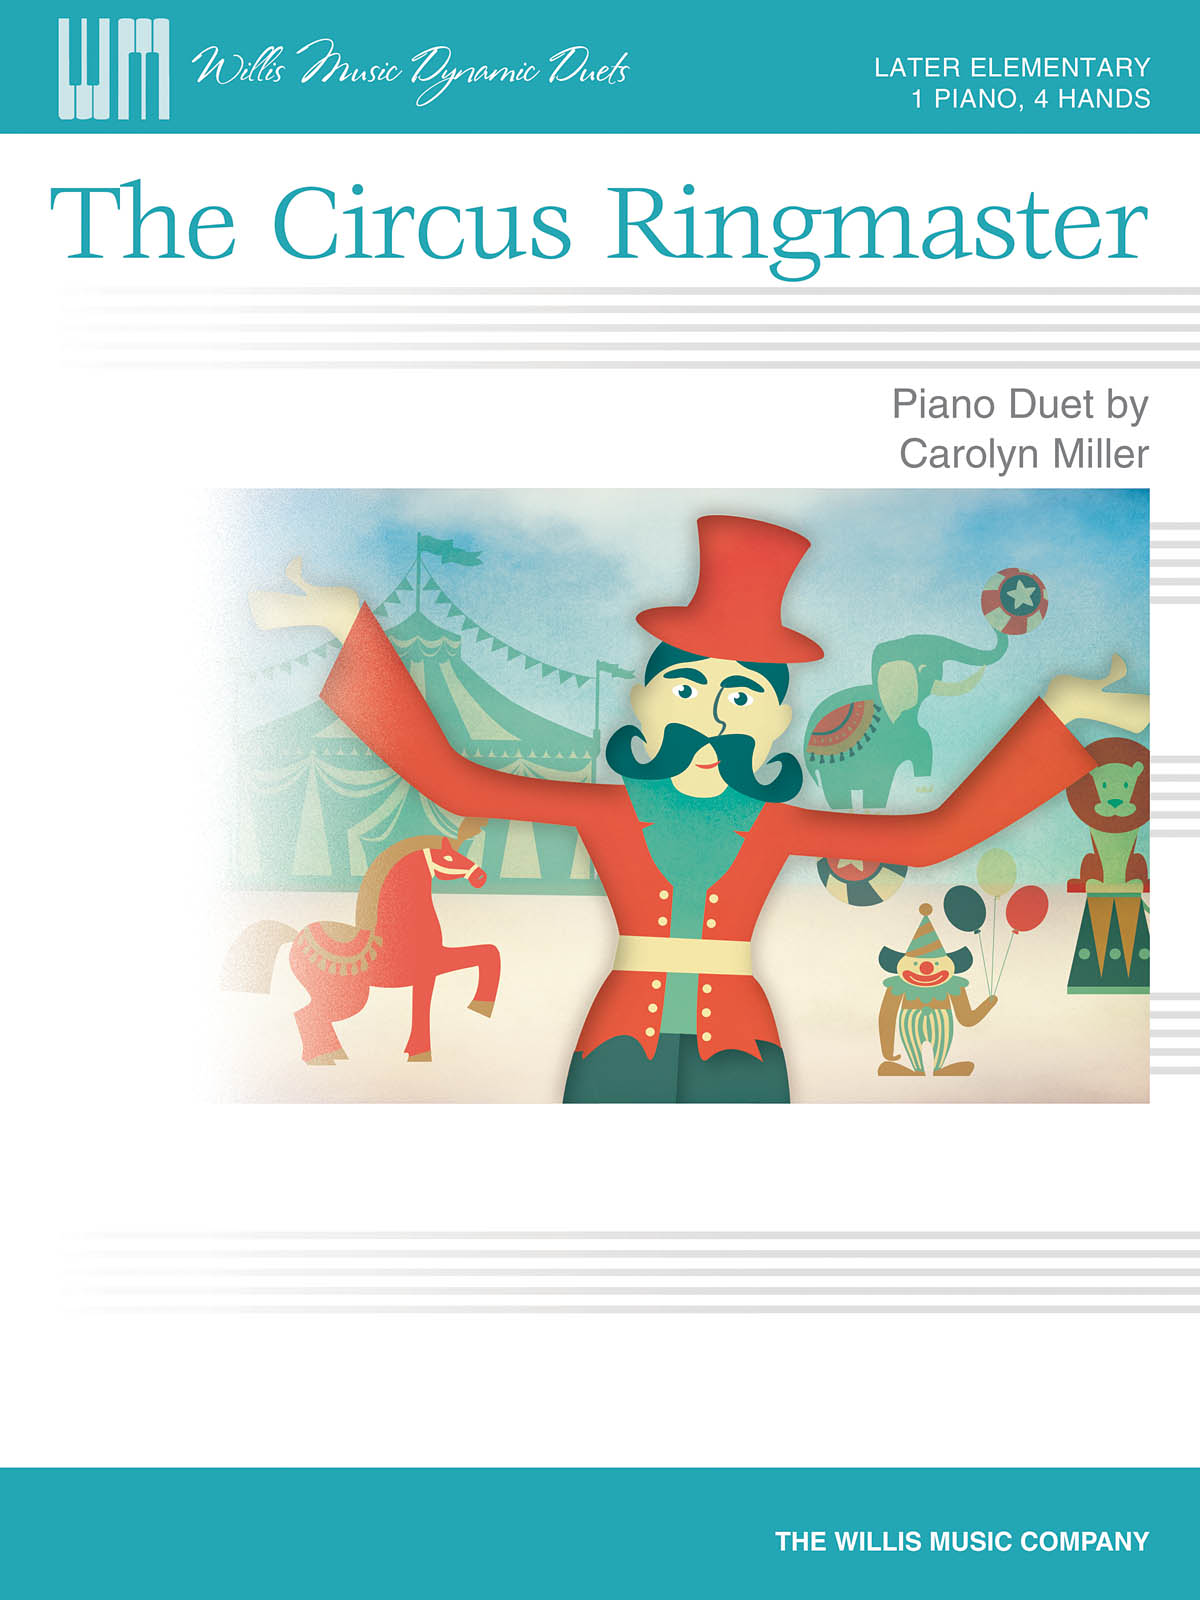 The Circus Ringmaster